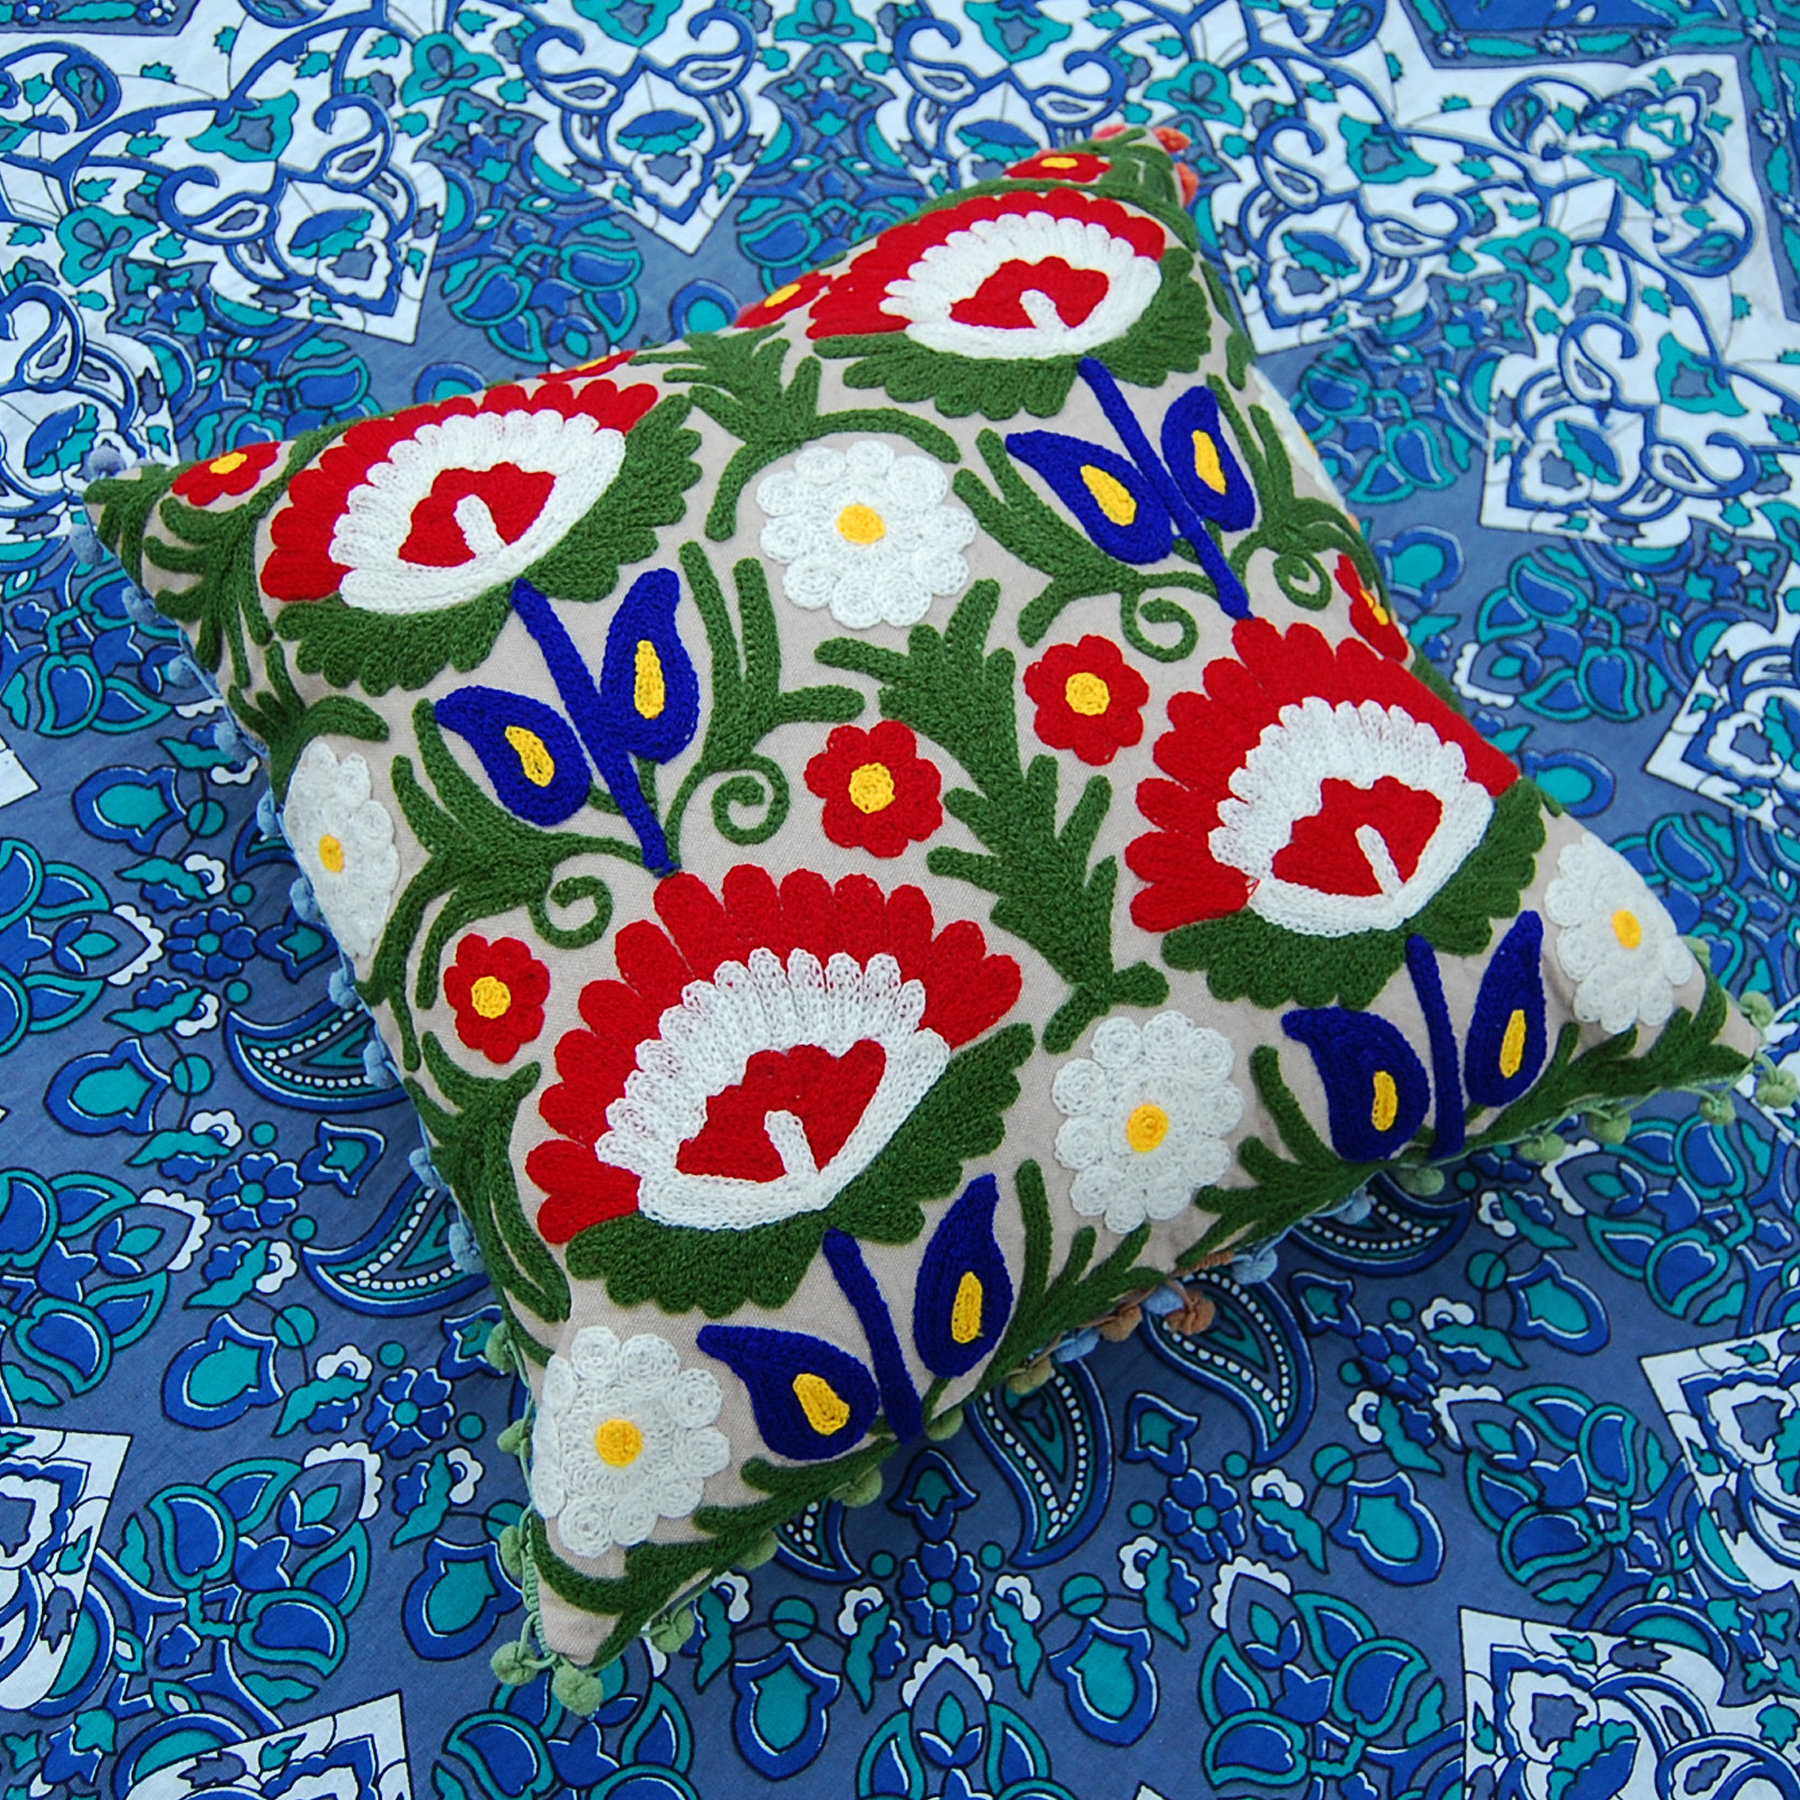 Handmade Suzani Embroidered Square Suzani Cushion Cover /Pillow Cases